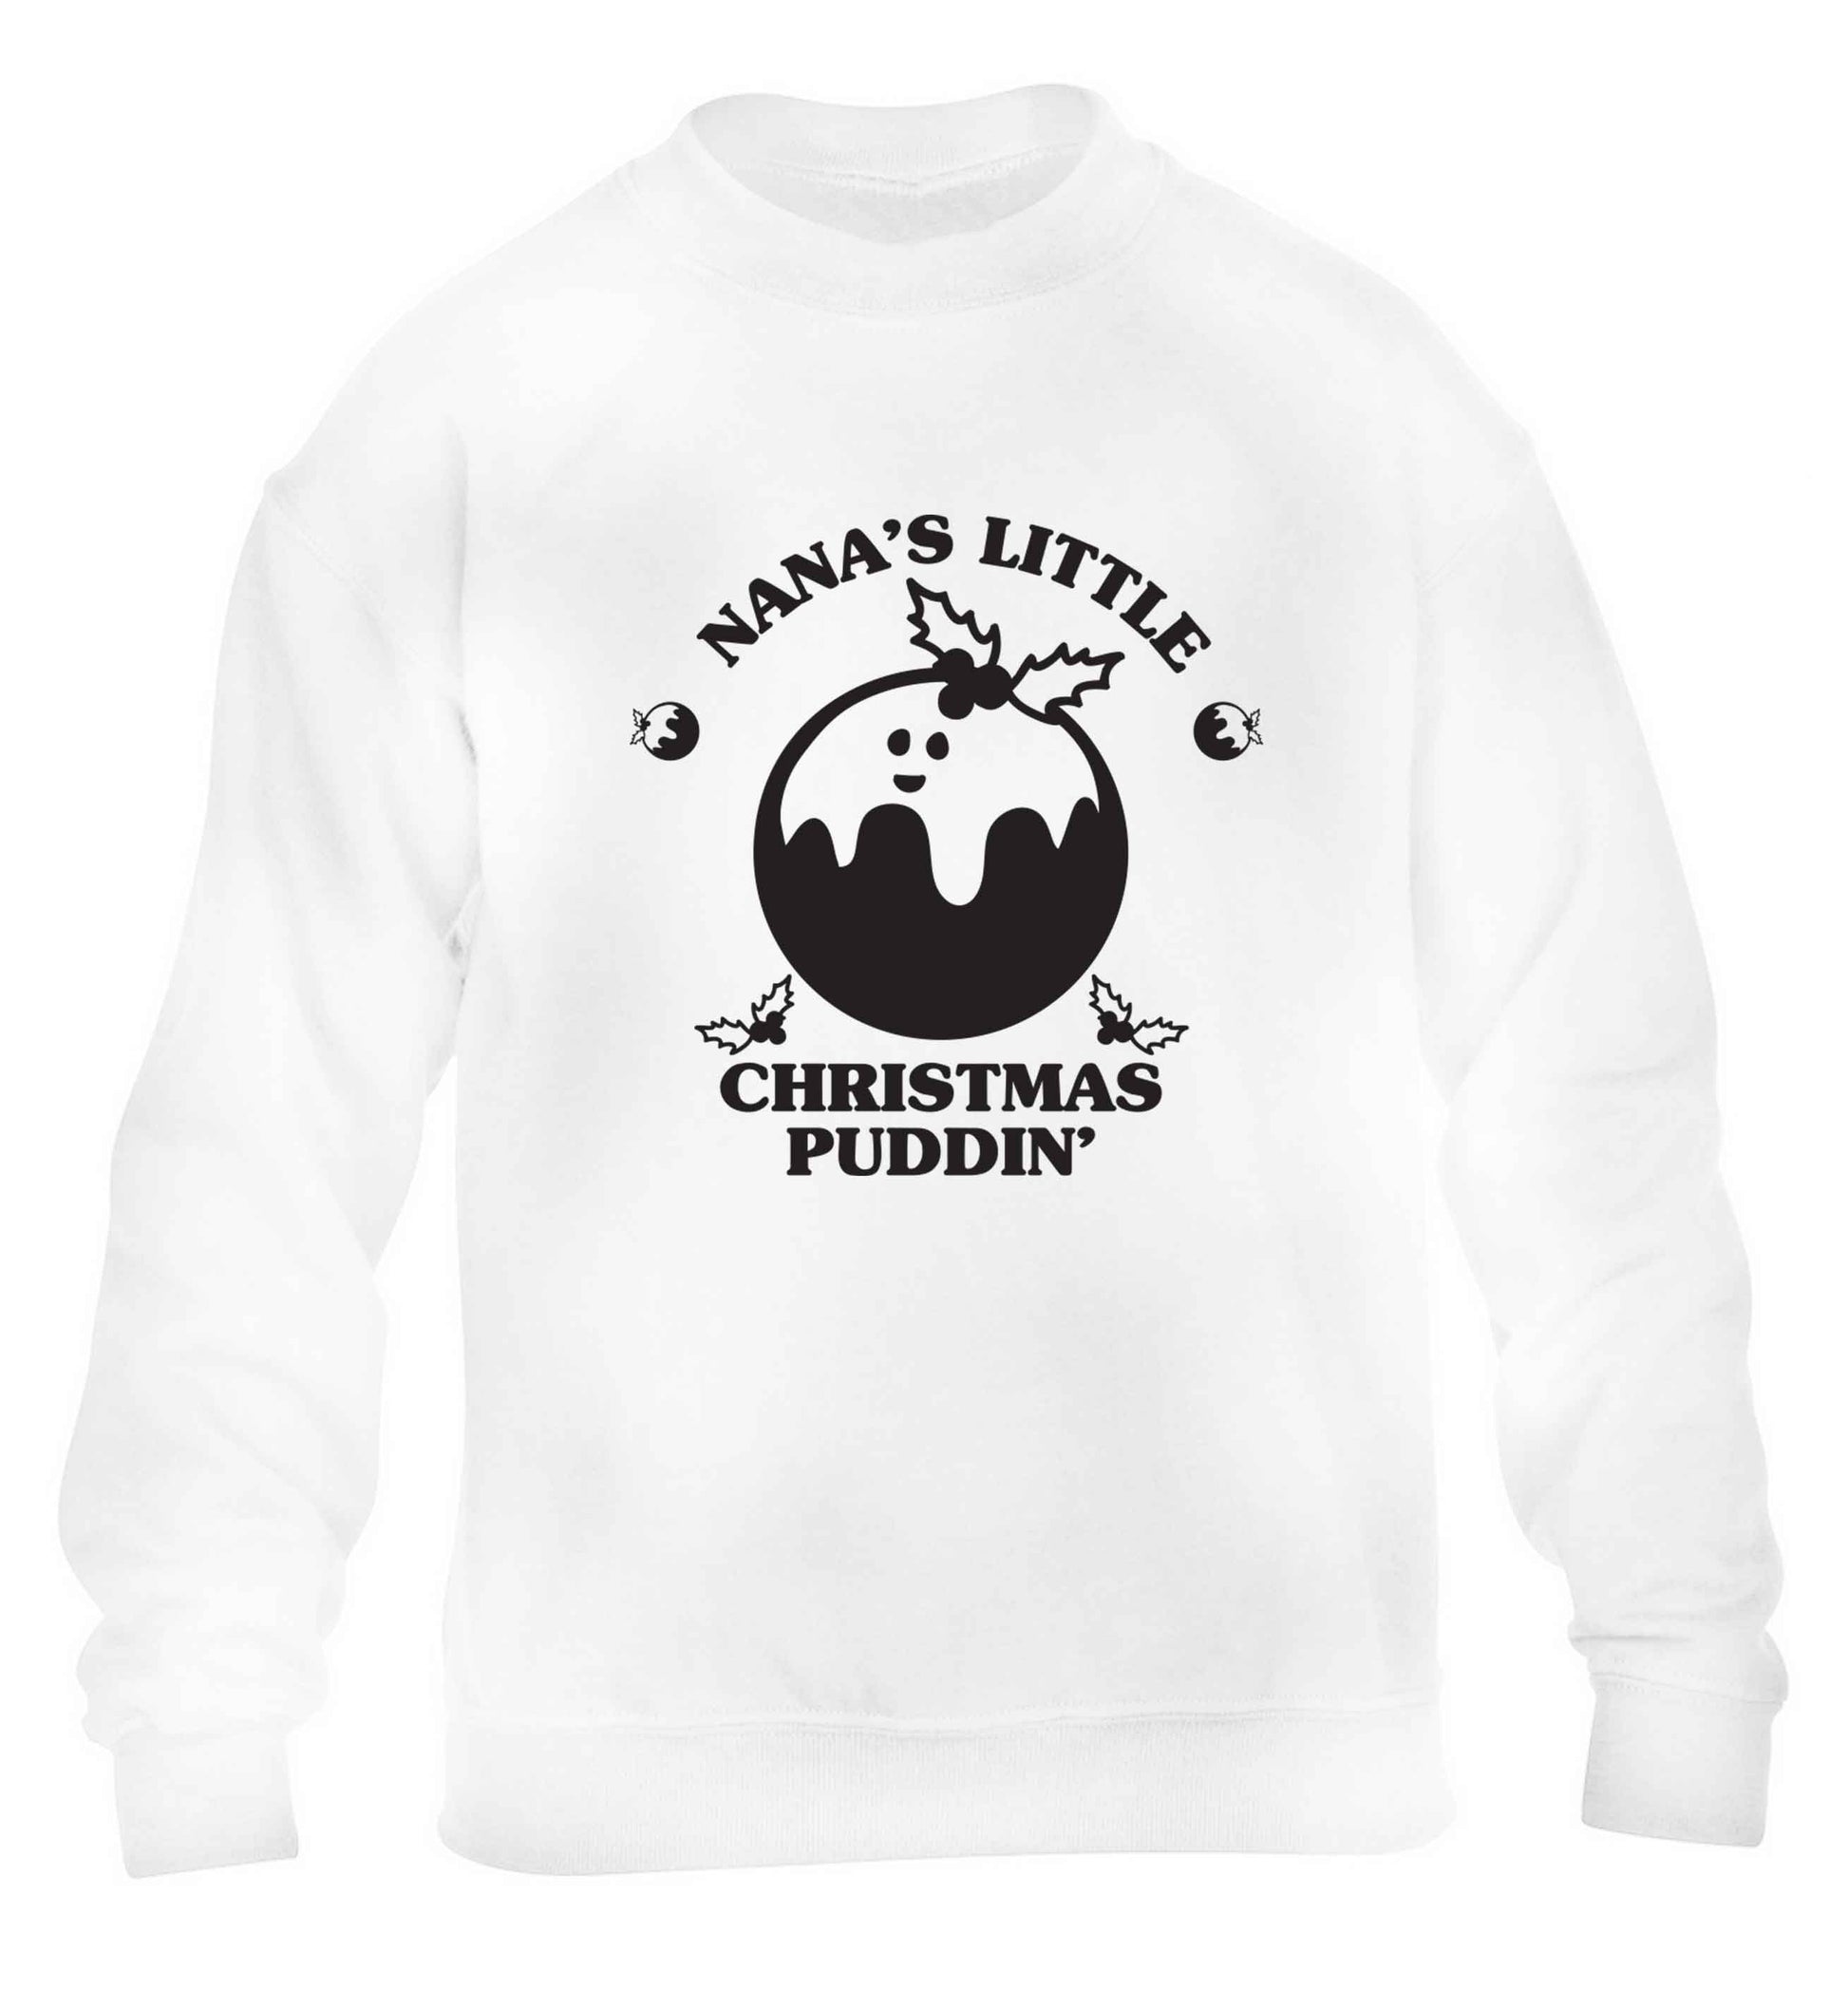 Nana's little Christmas puddin' children's white sweater 12-13 Years